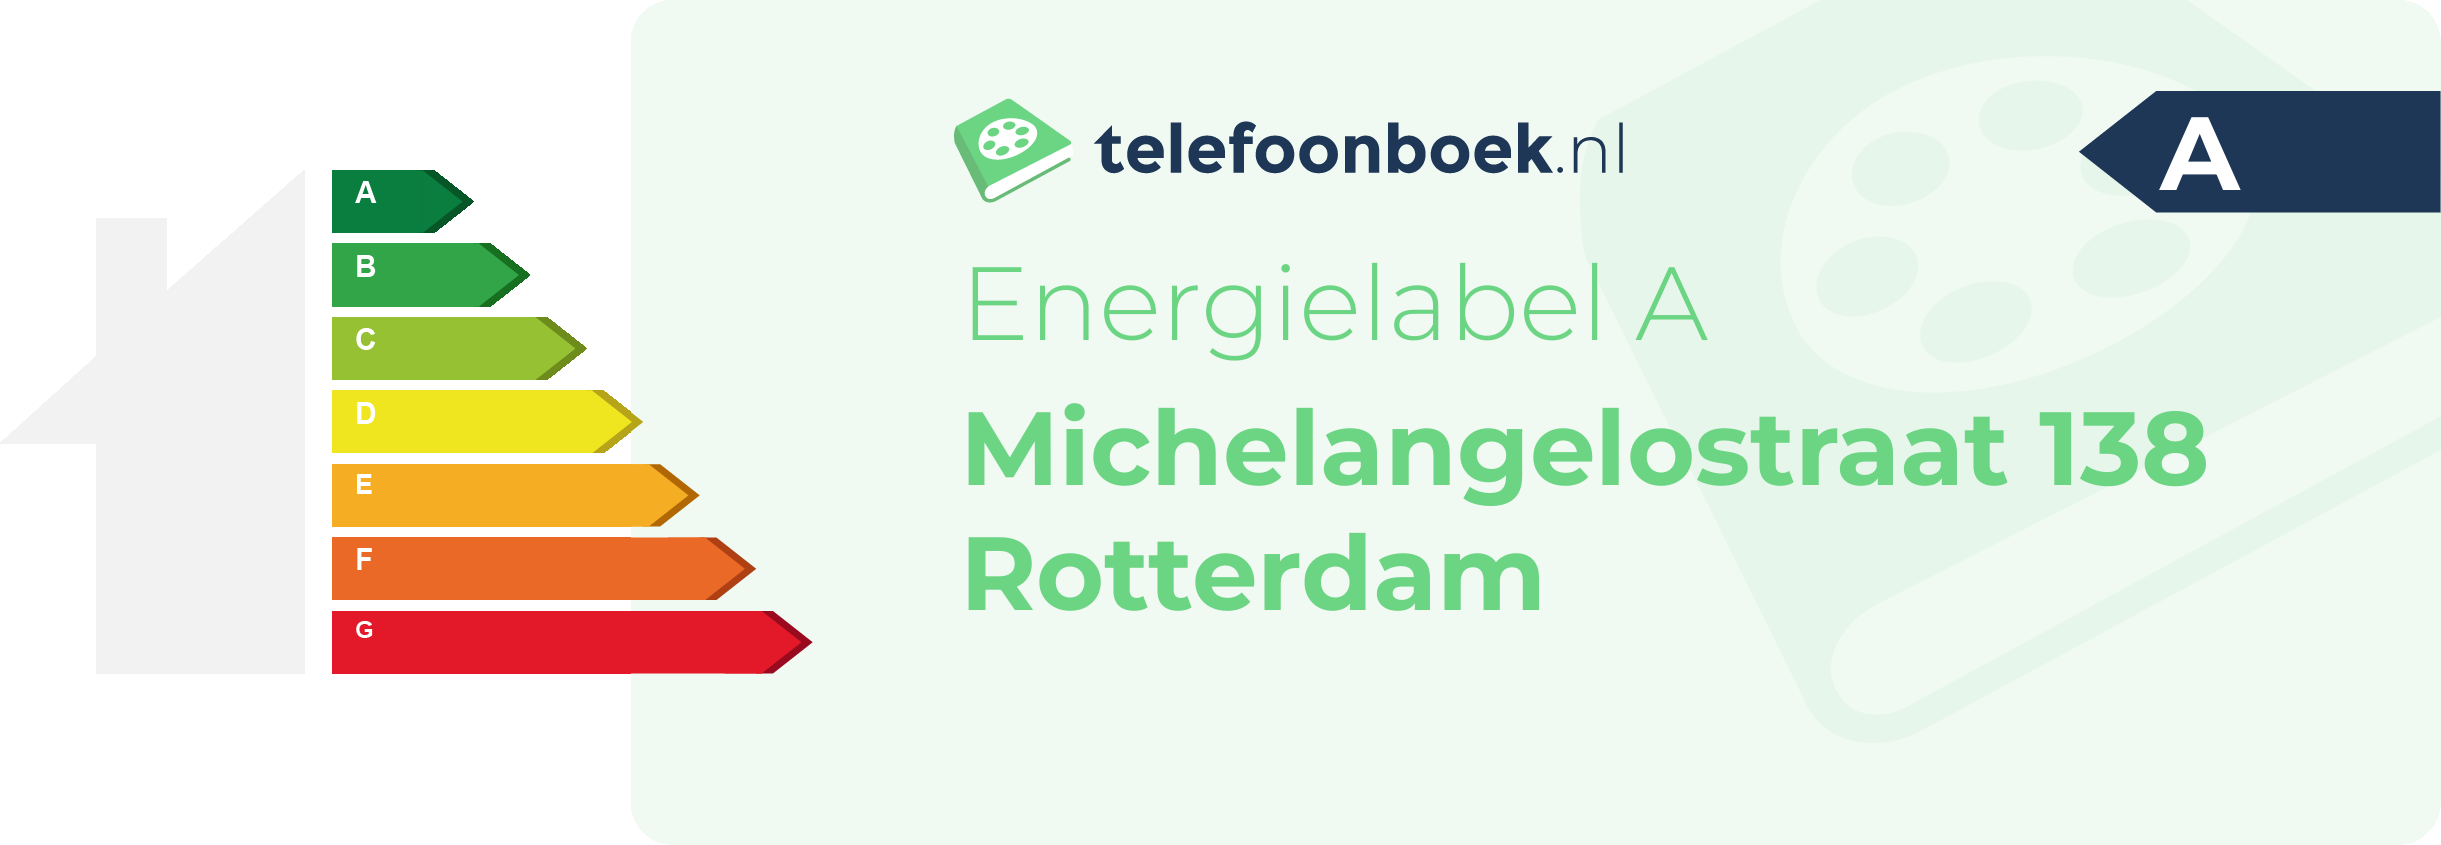 Energielabel Michelangelostraat 138 Rotterdam